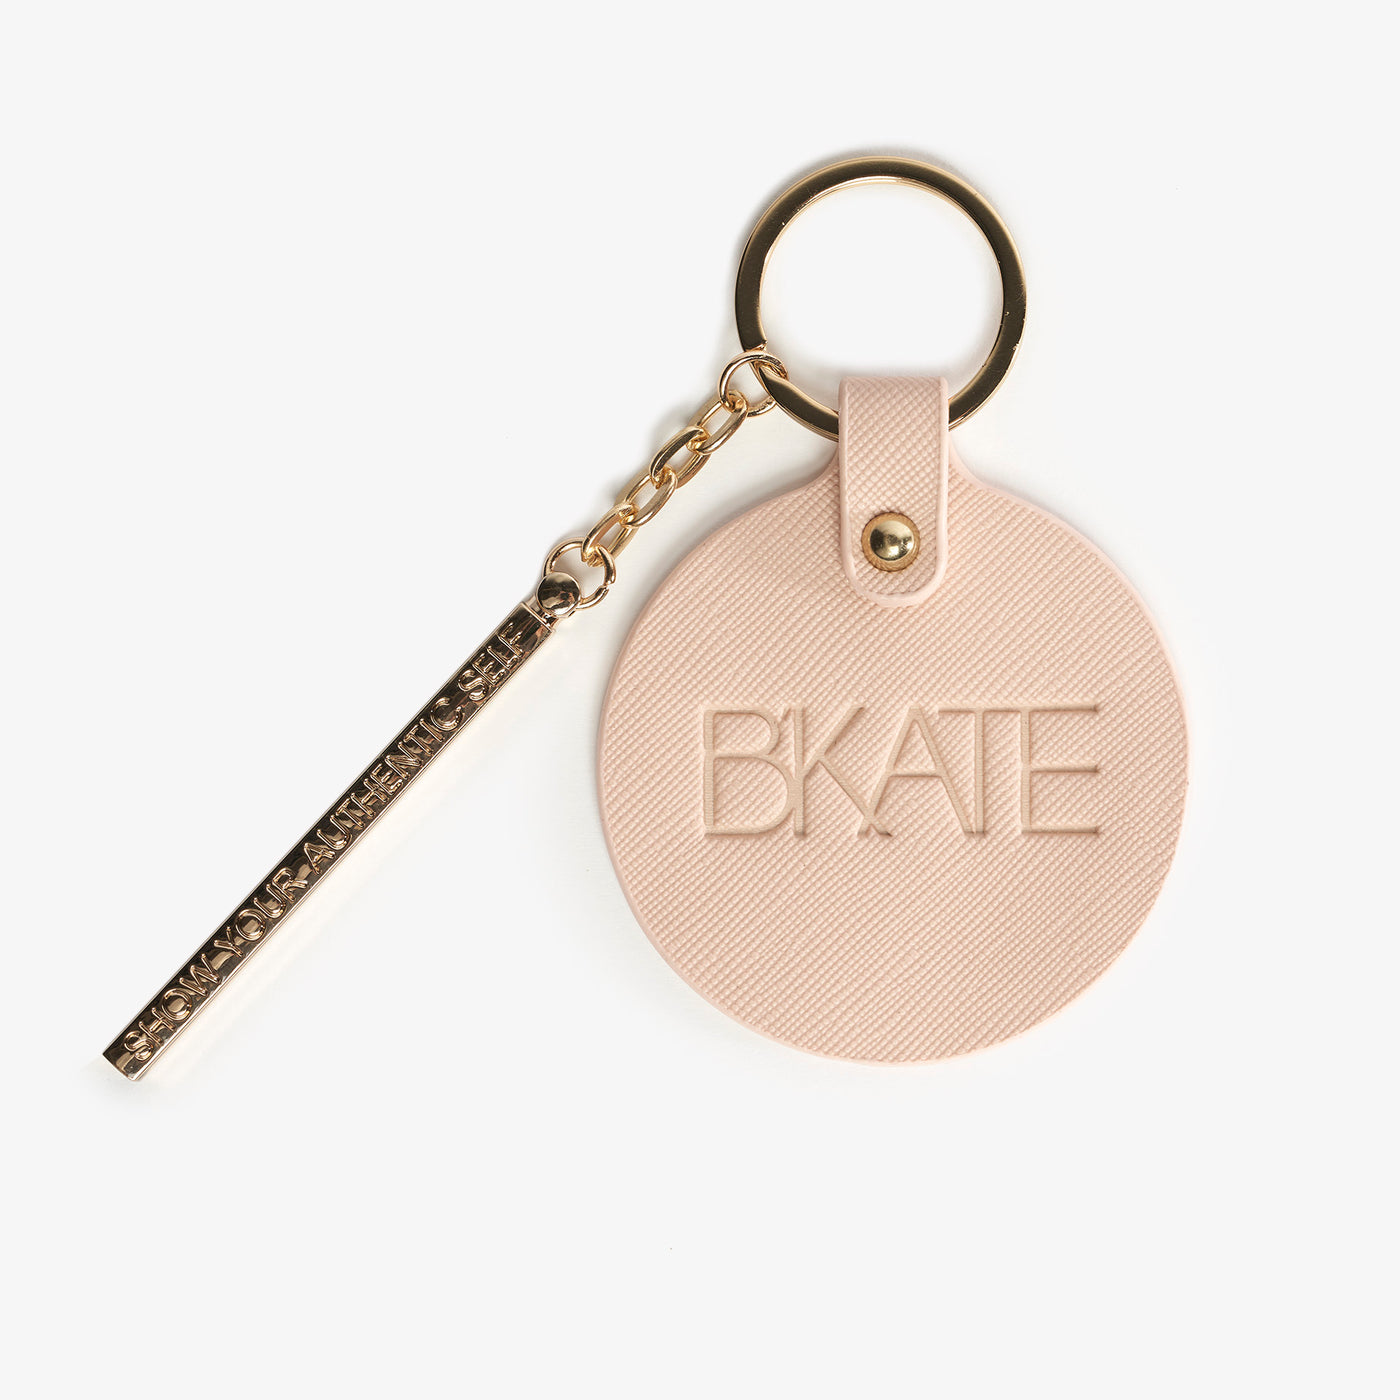 bkate keychain